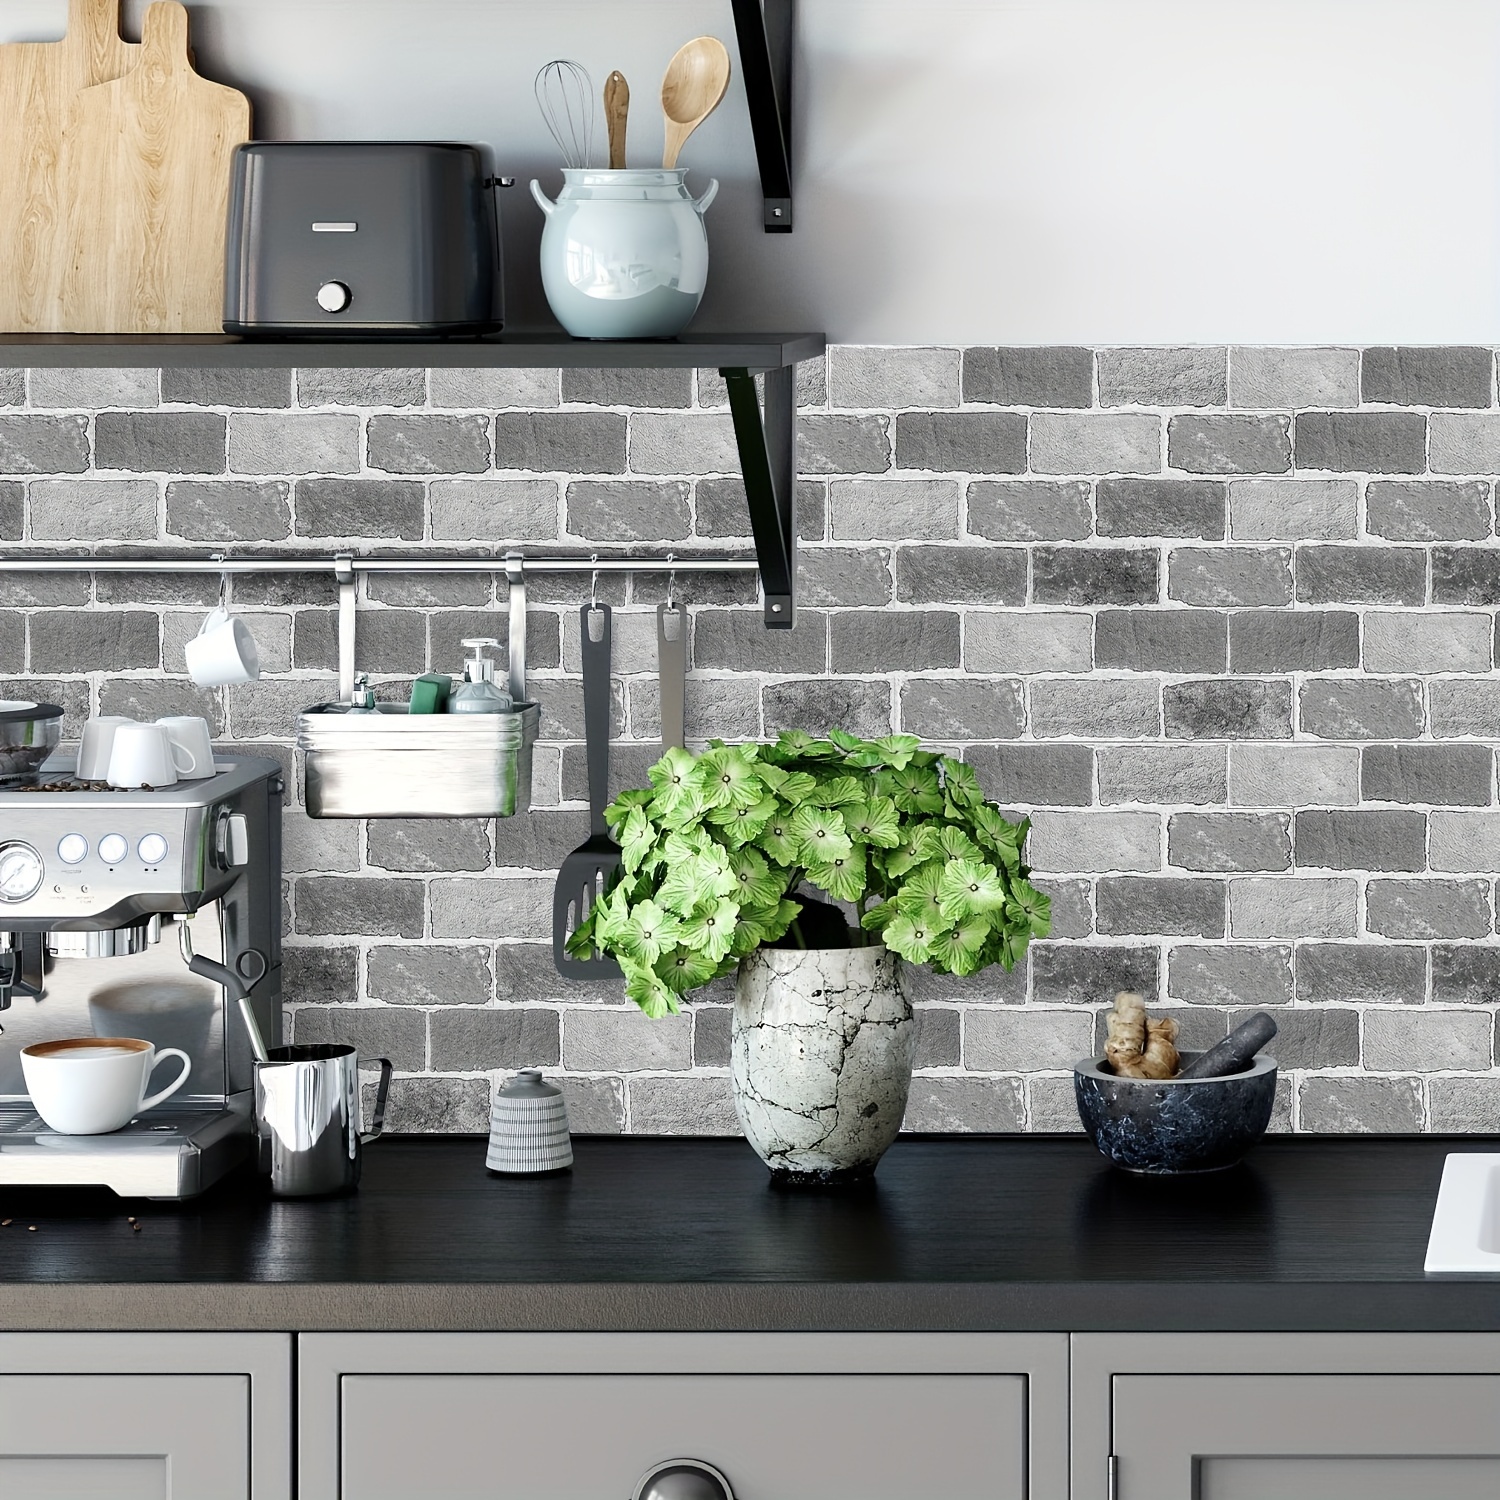 10 Best Gray Backsplash Ideas For Your Kitchen Wall Decor – Commomy